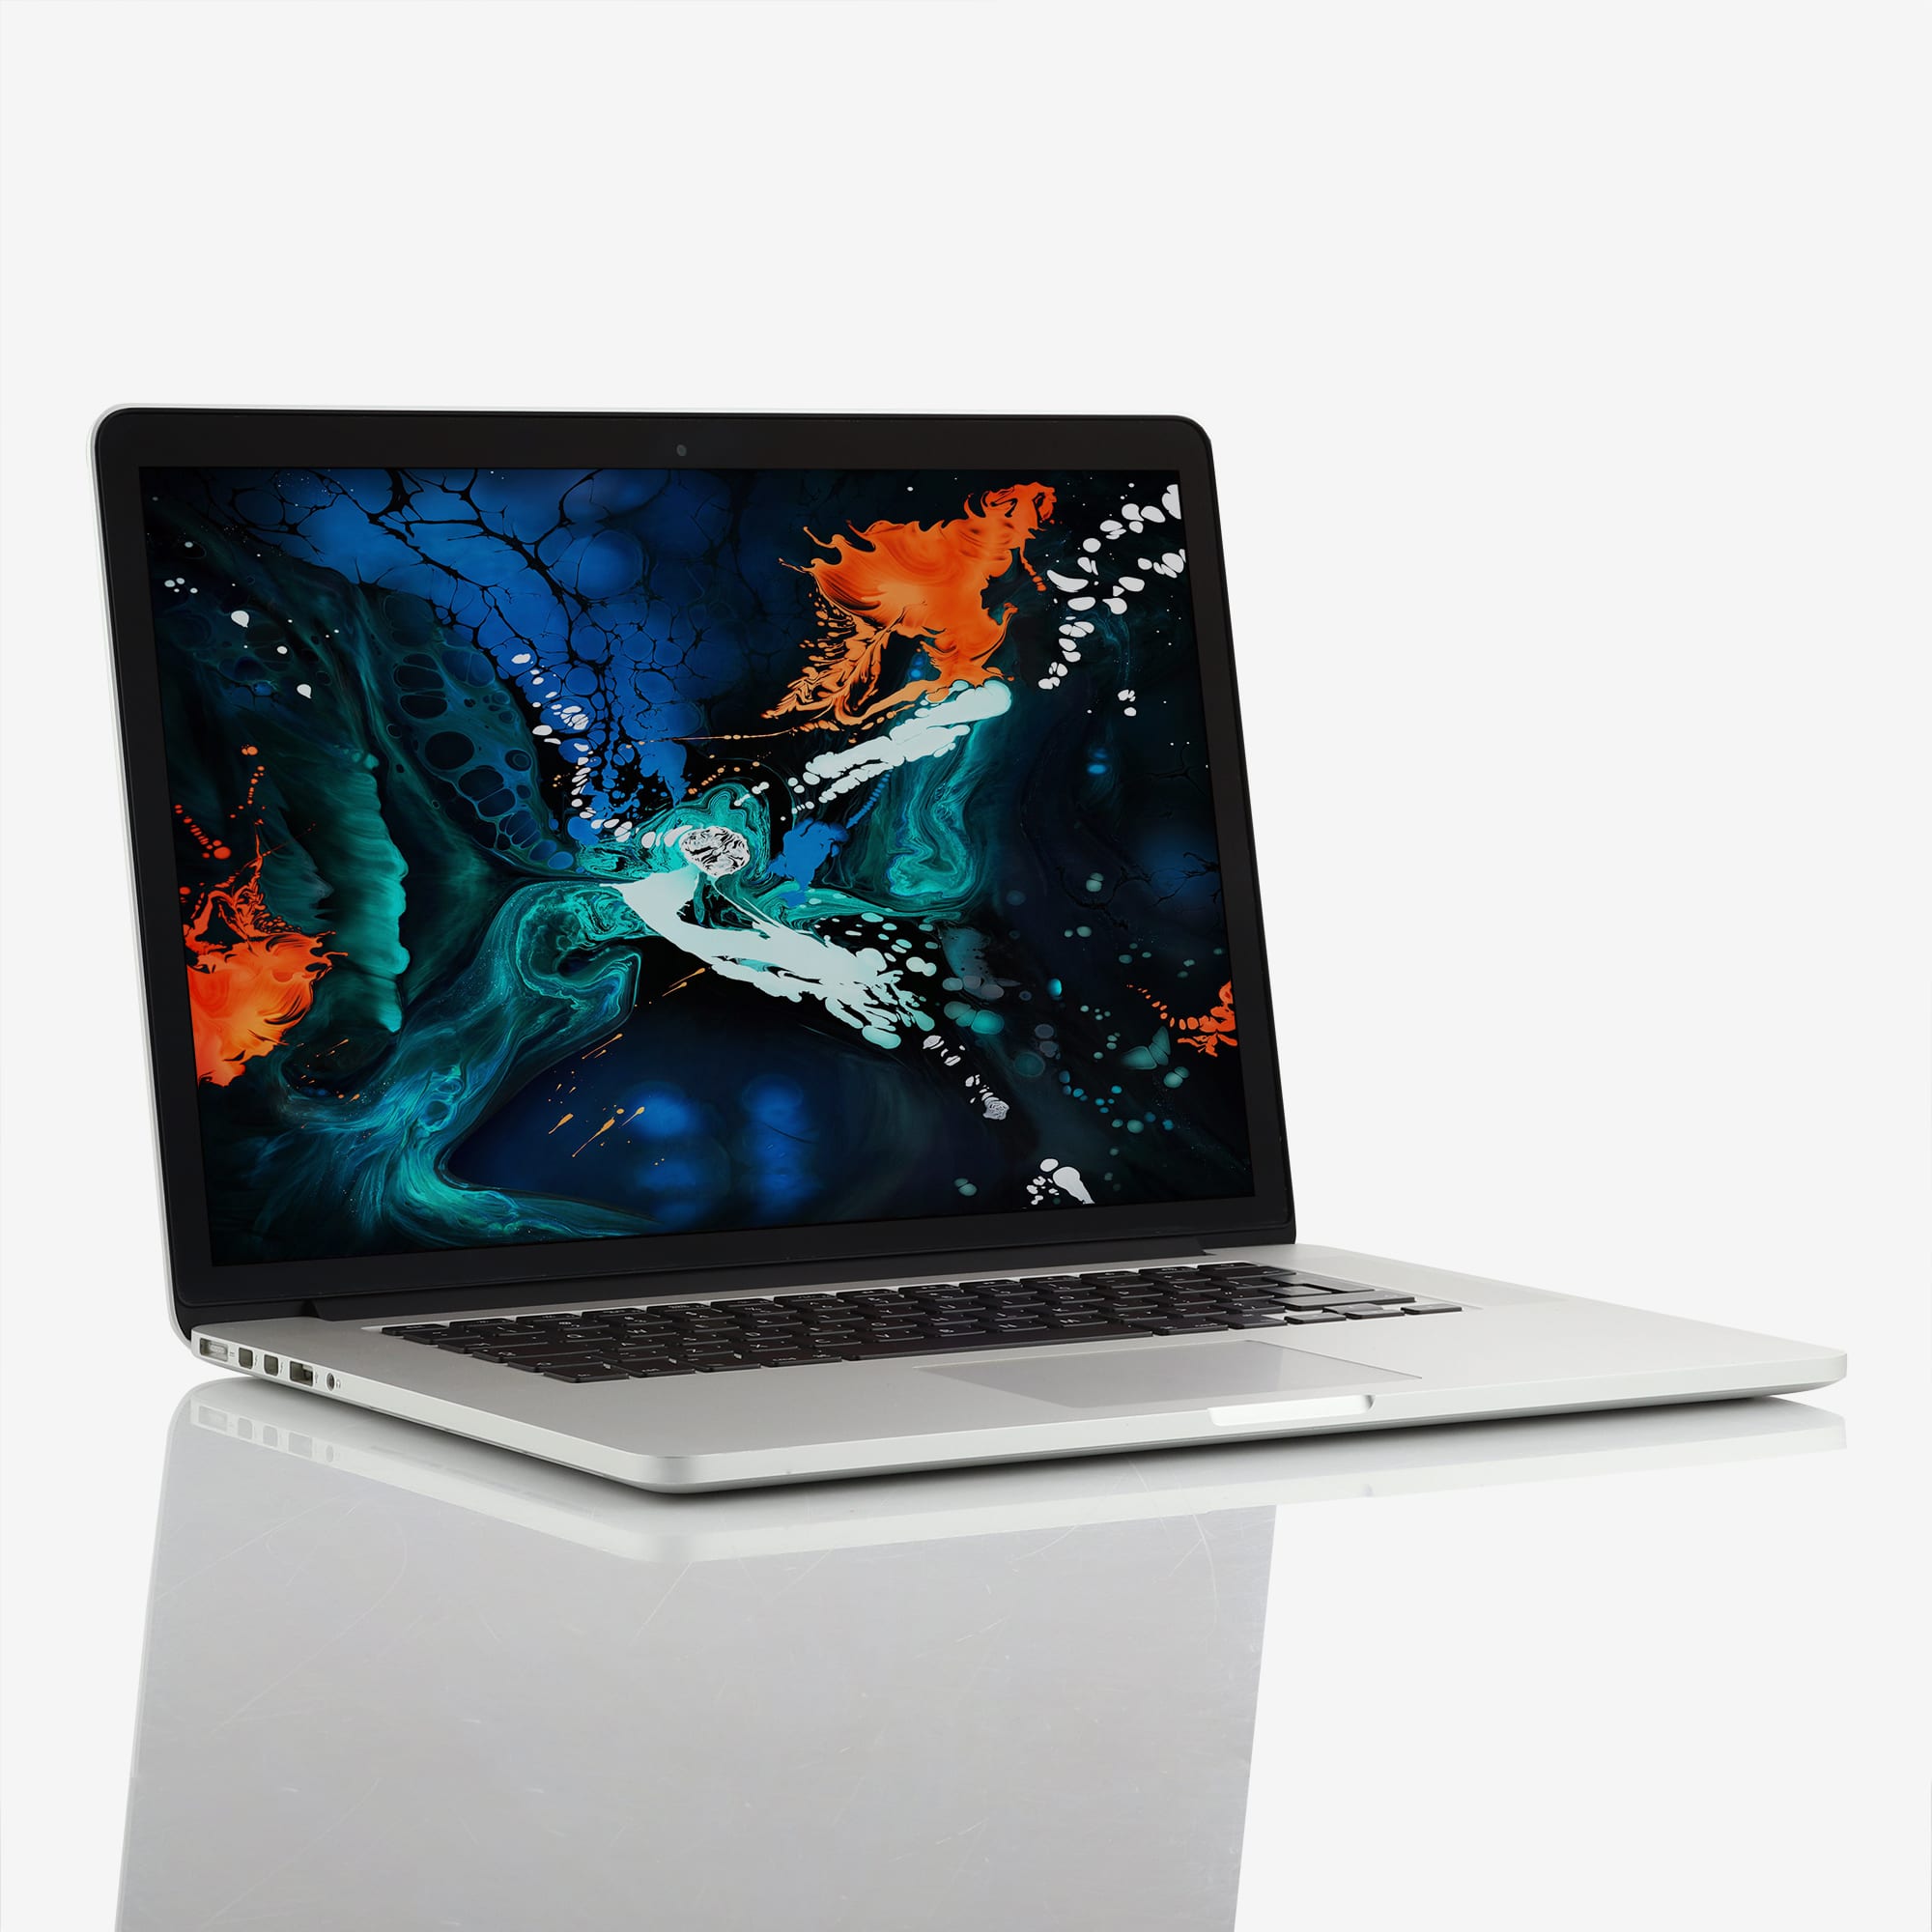 1 x Apple MacBook Pro Retina 15 Inch Quad Core i7 2.20 GHz (2014)